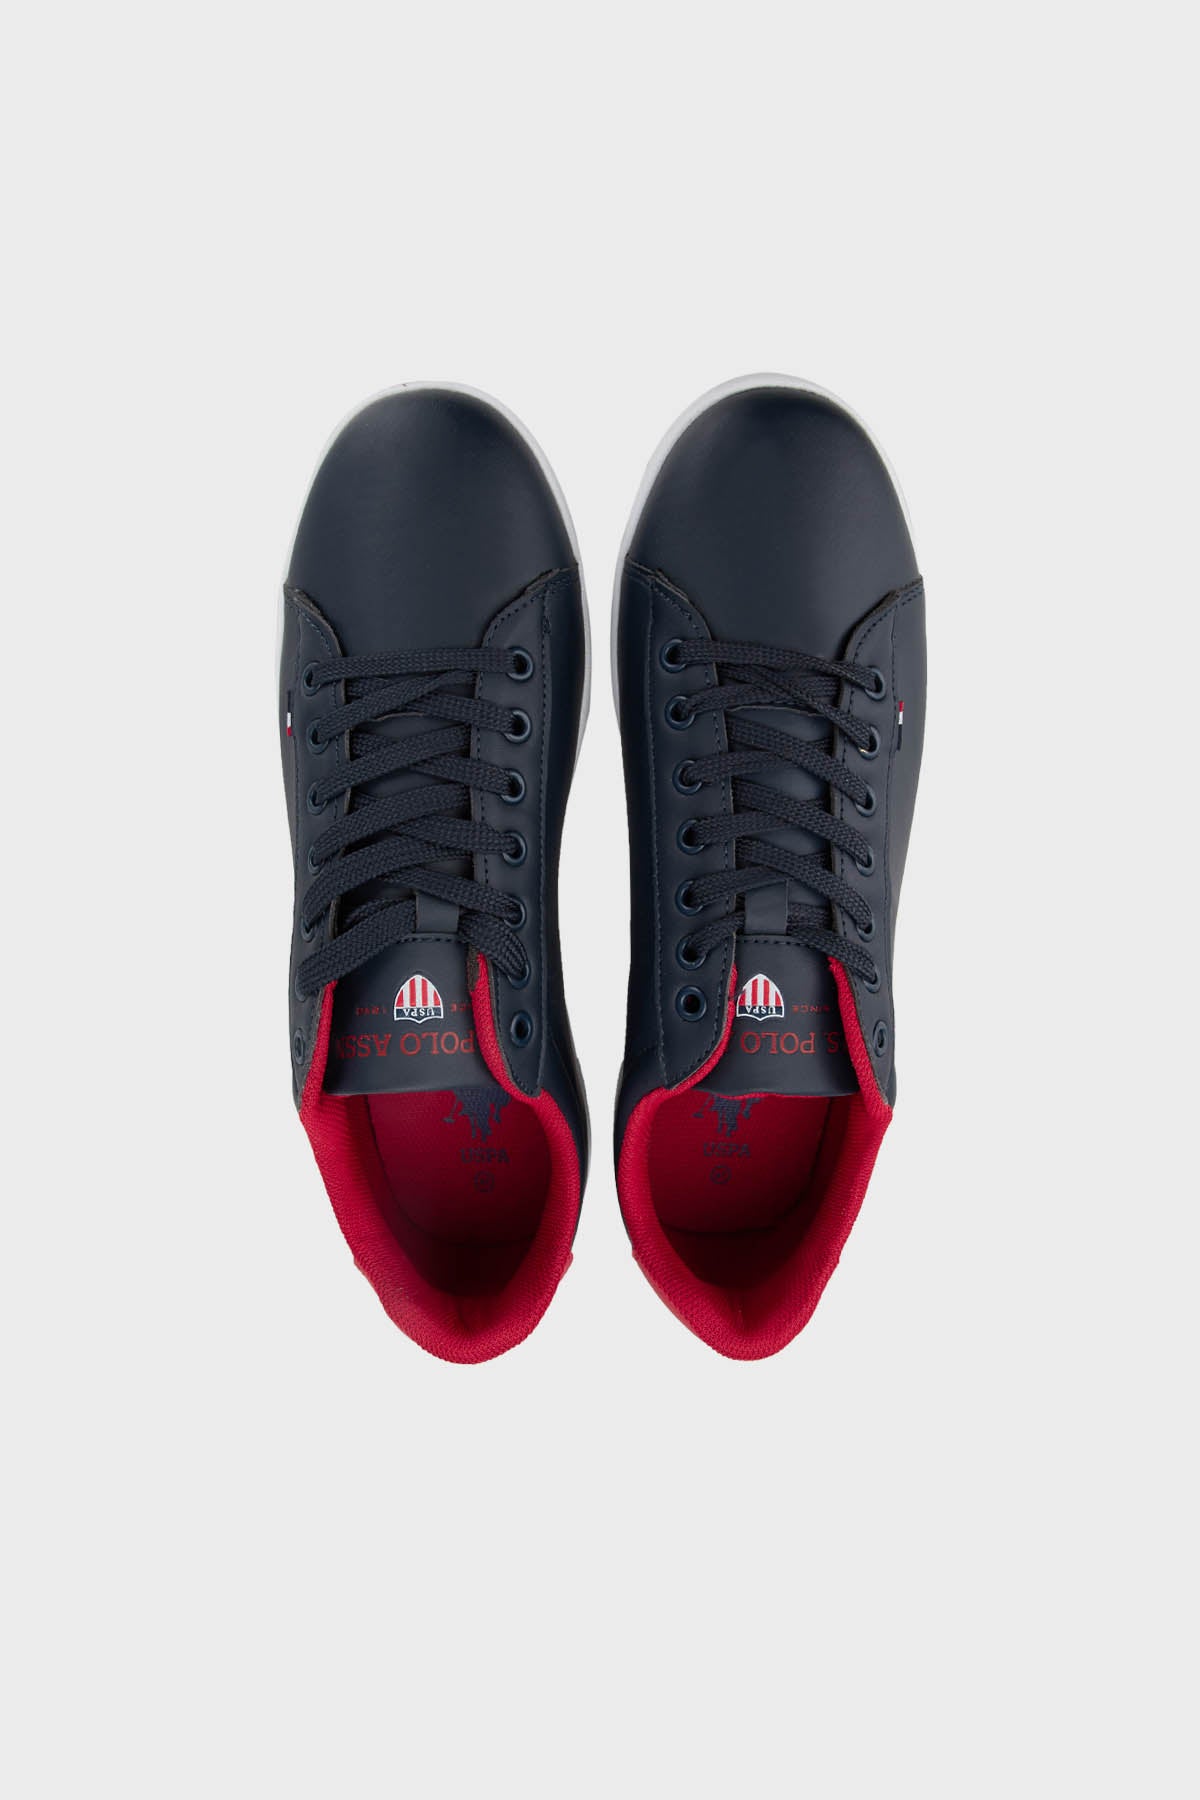 U.S. Polo Assn Sneaker Erkek Ayakkabı FRANCO 3FX LACİVERT